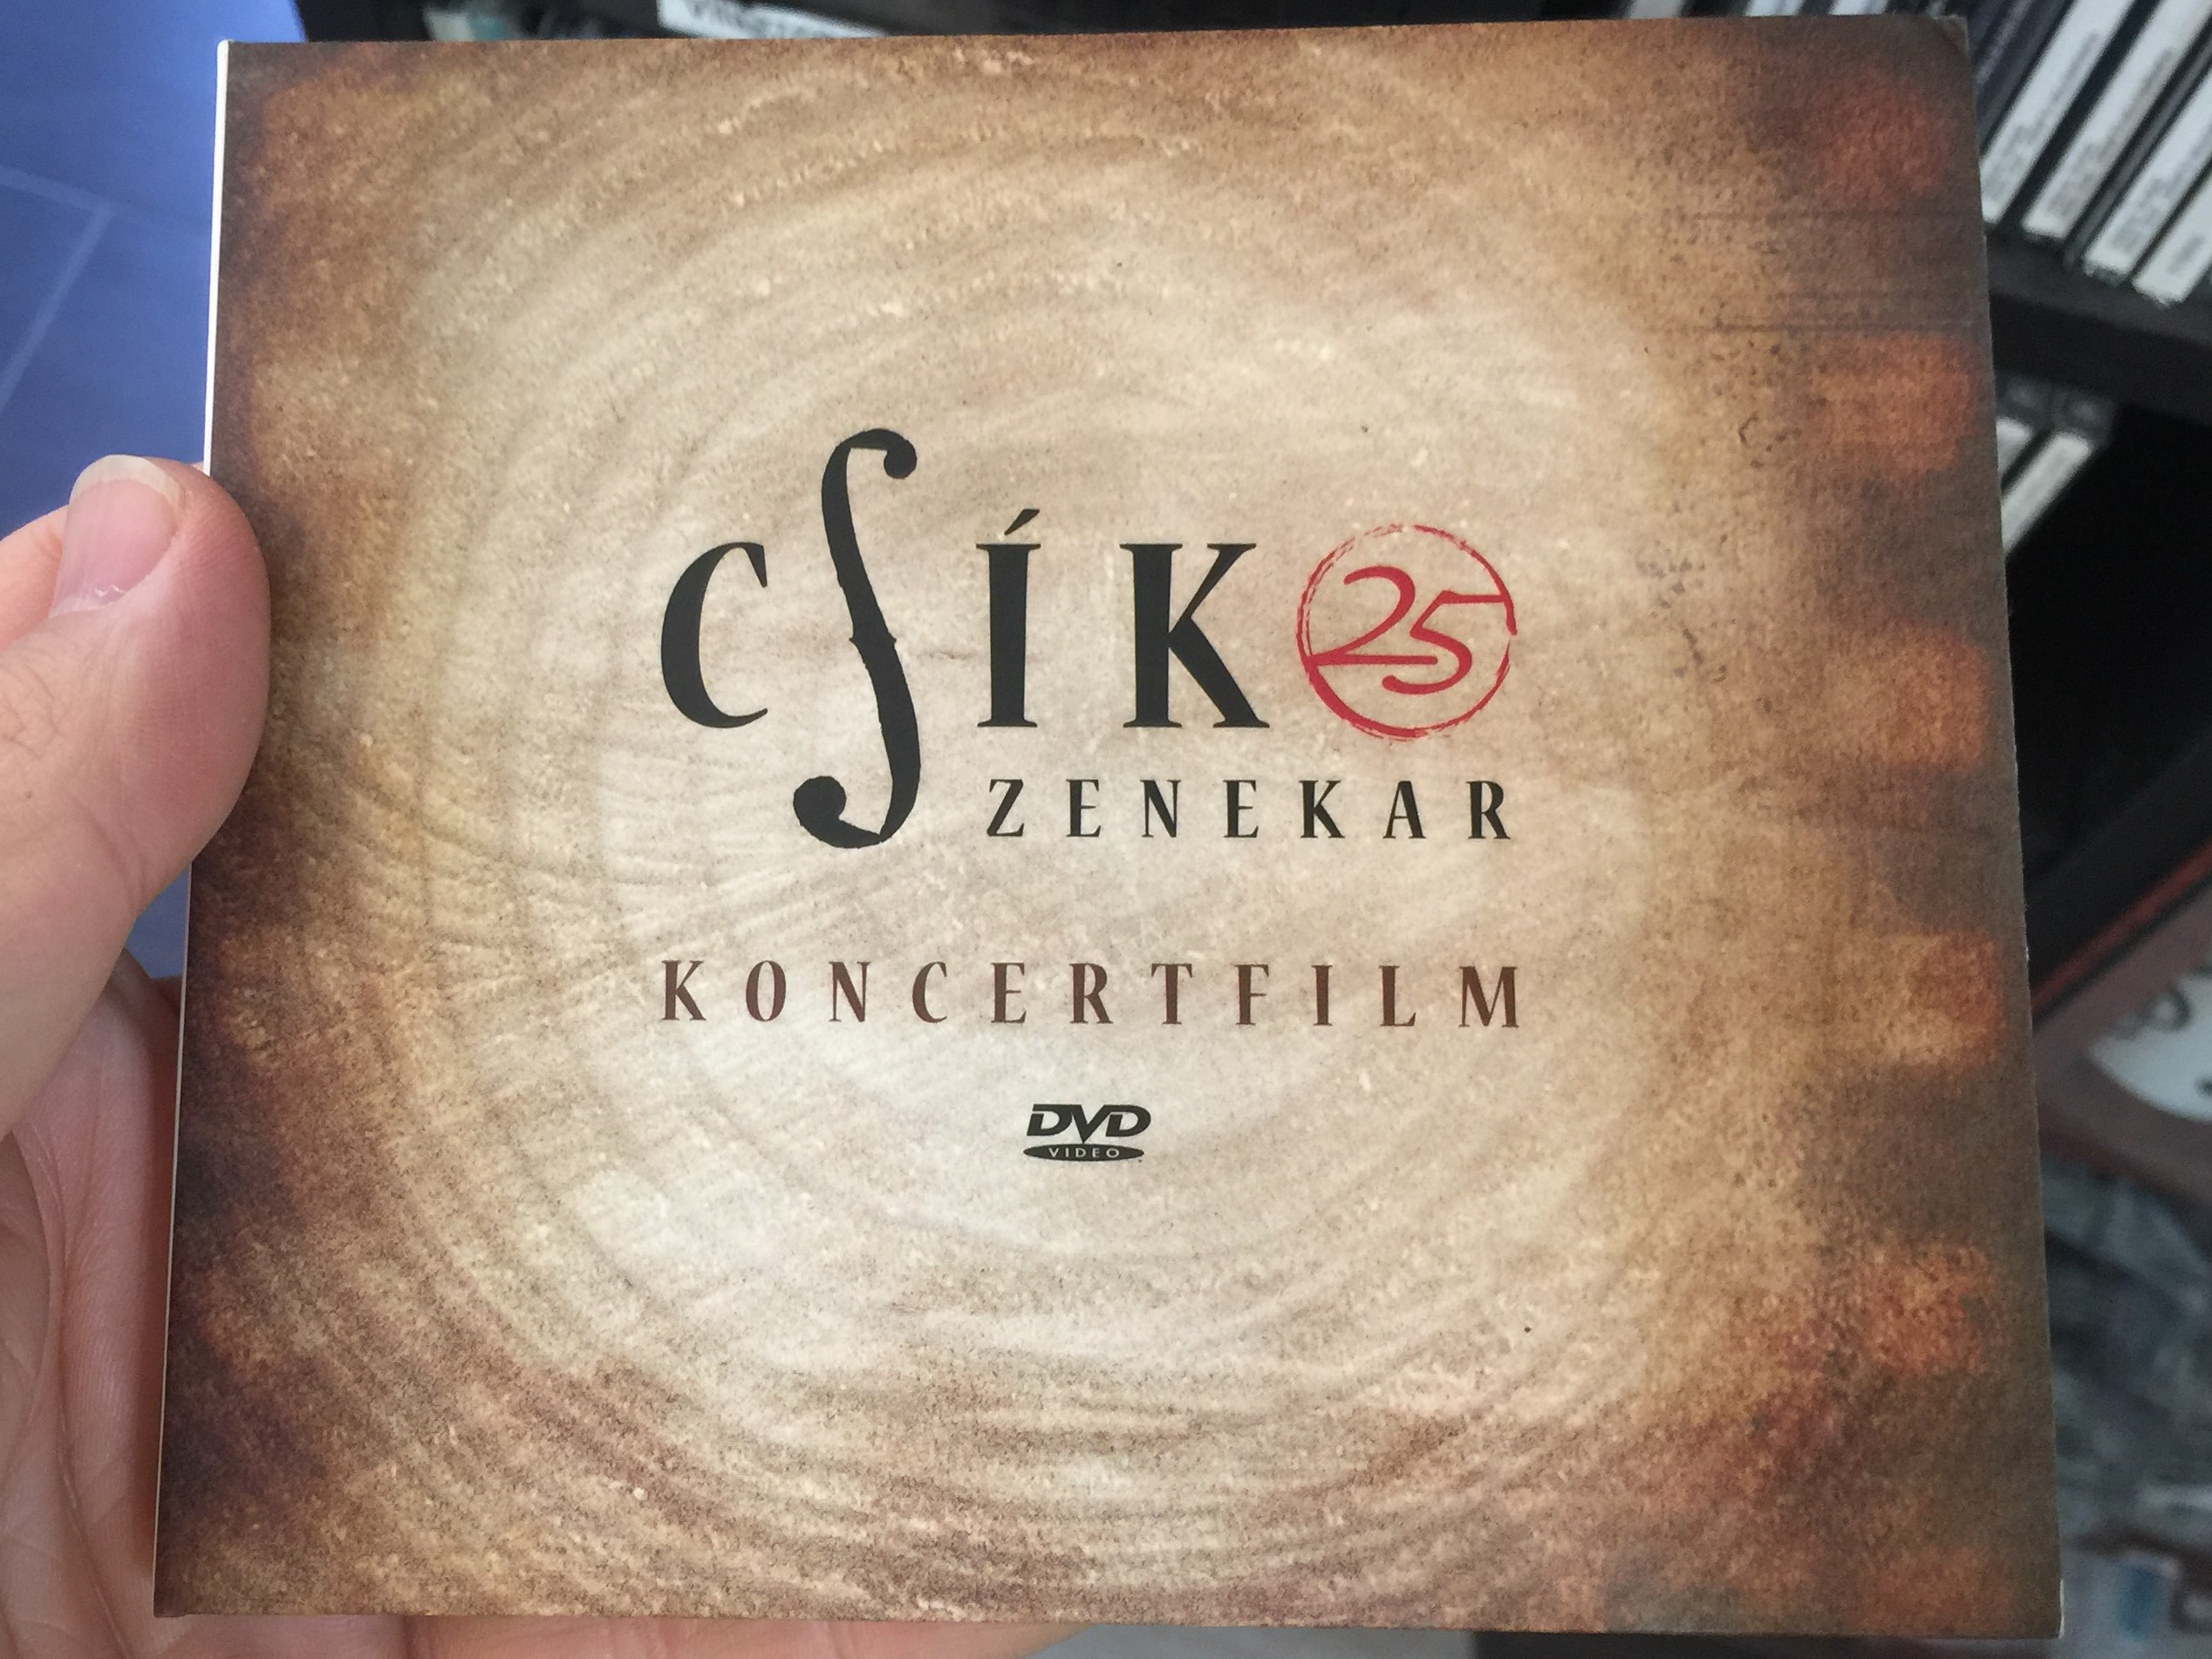 cs-k-zenekar-25-koncertfilm-fon-budai-zeneh-z-dvd-cd-2015-5998048537433-1-.jpg